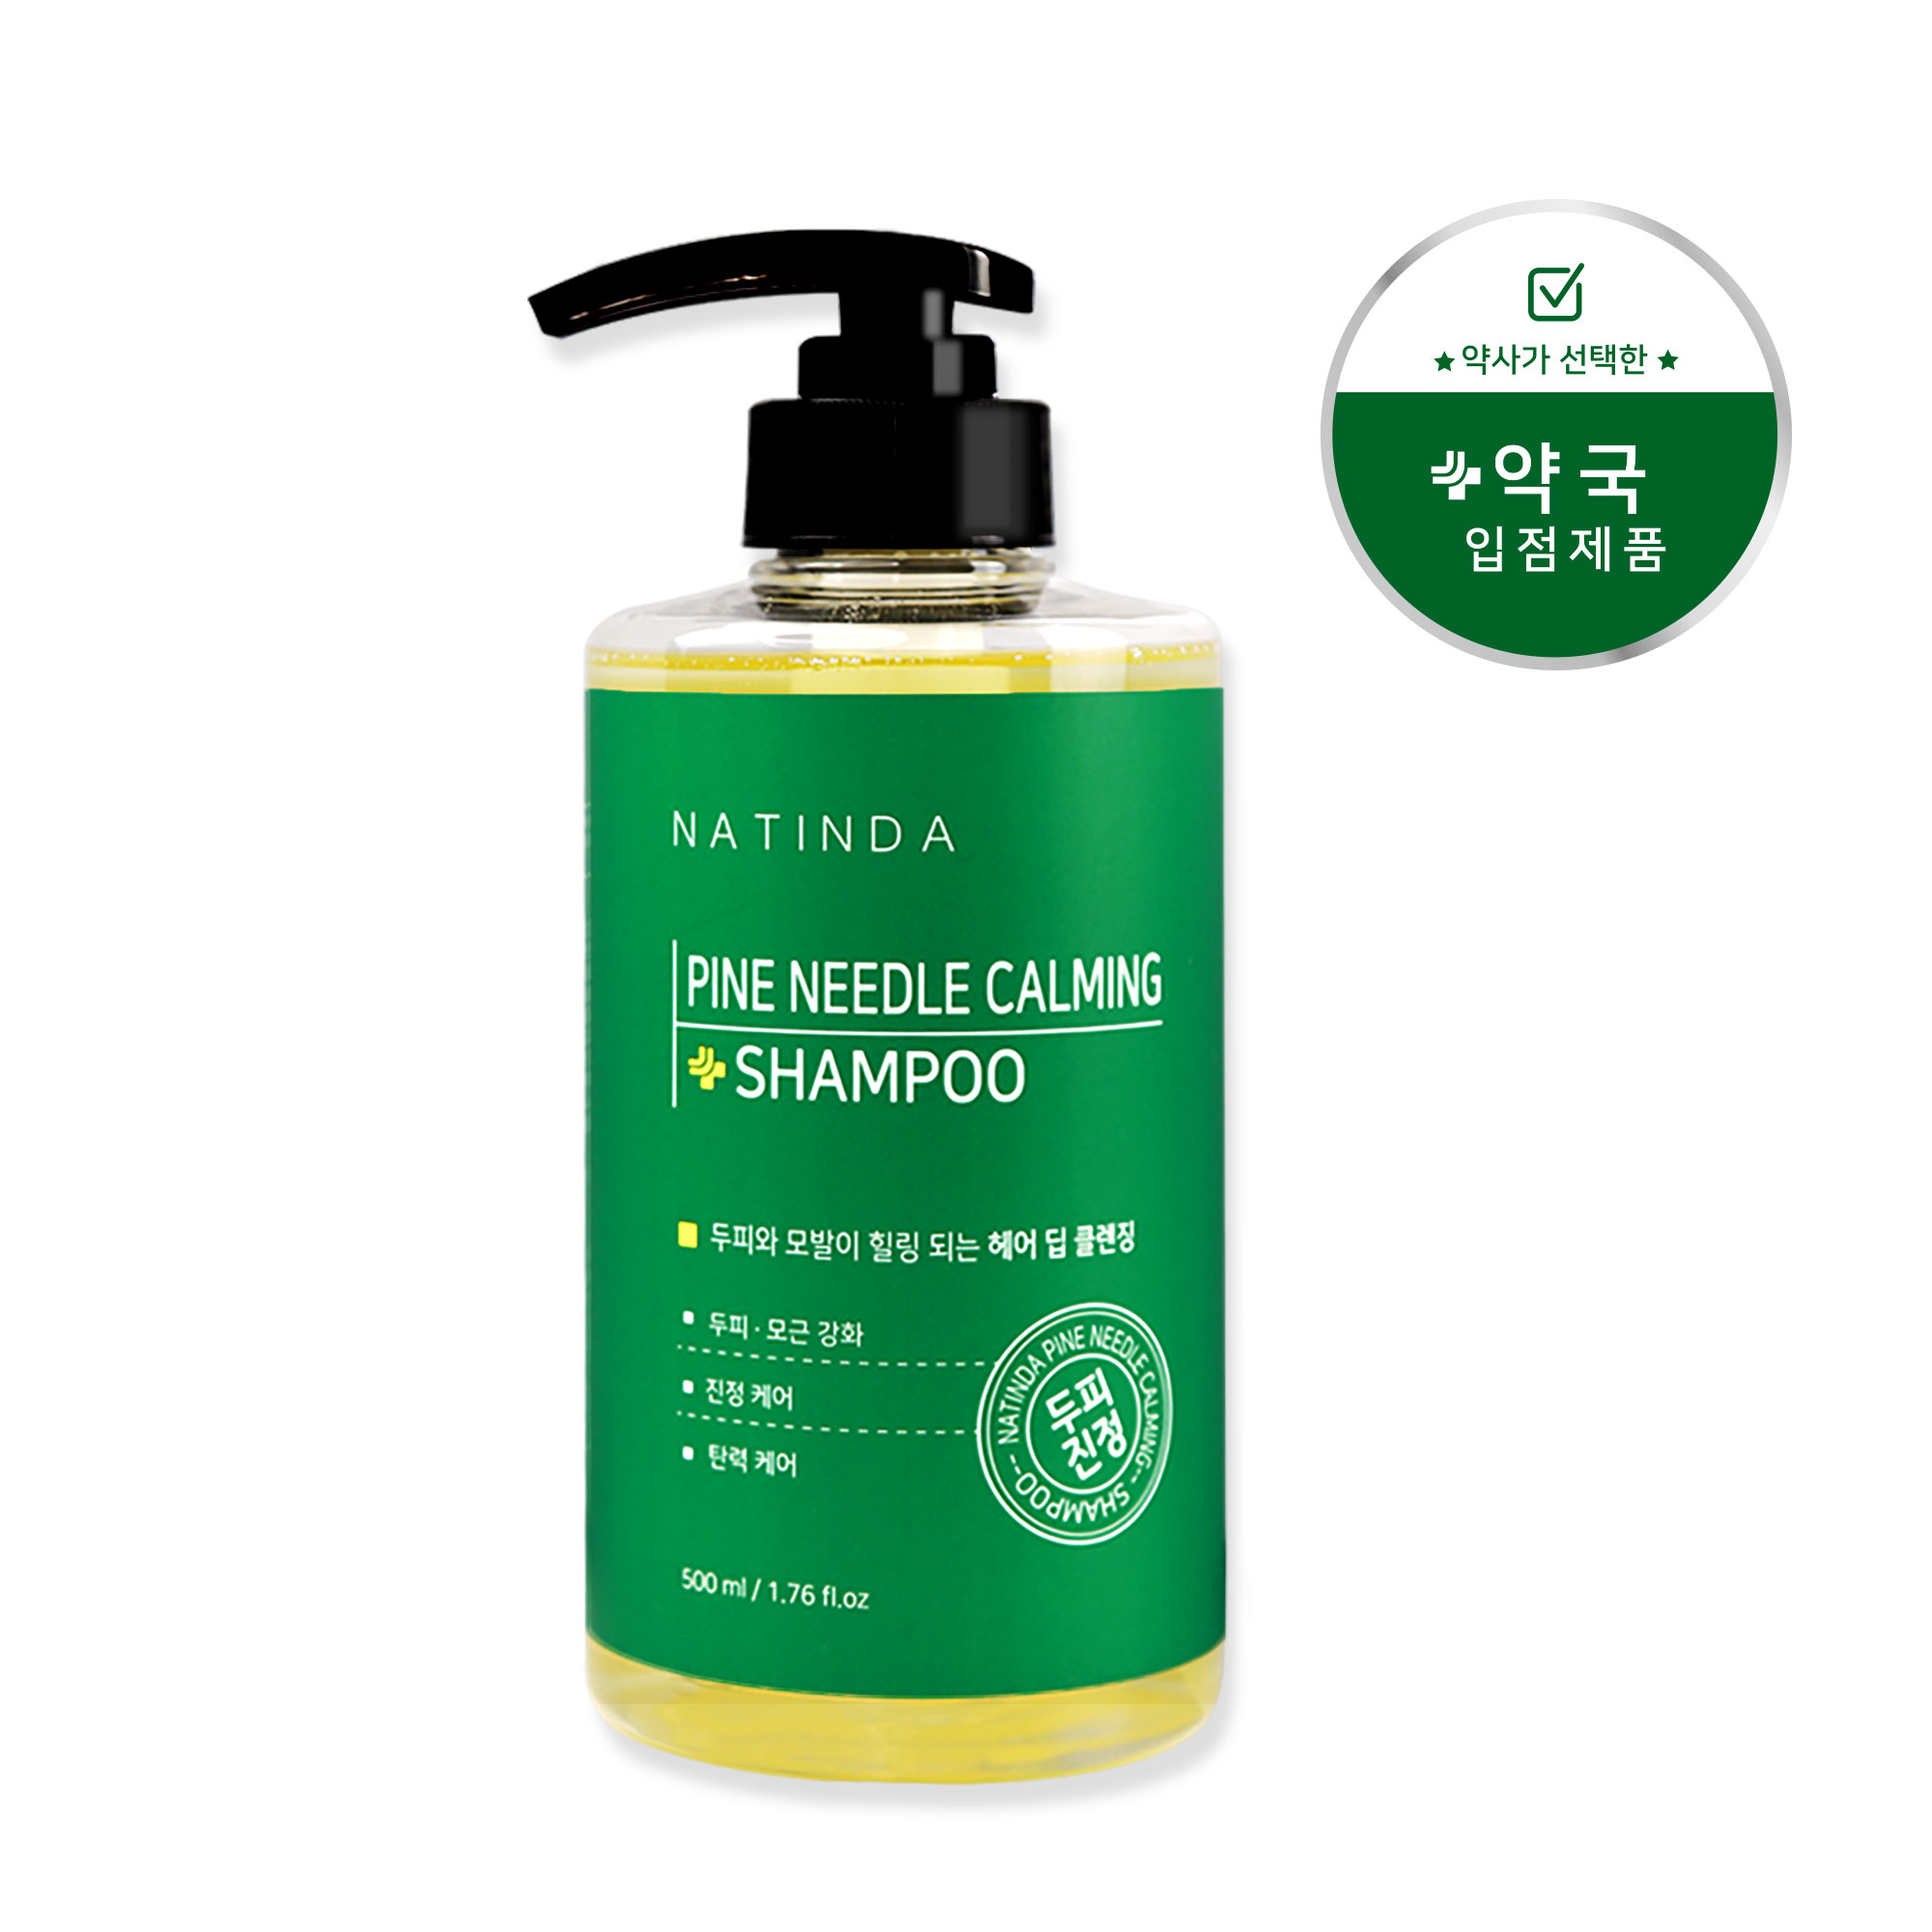 Natinda Fine Needle Calming Shampoo 500g / Best slightly acidic shampoo for scalp